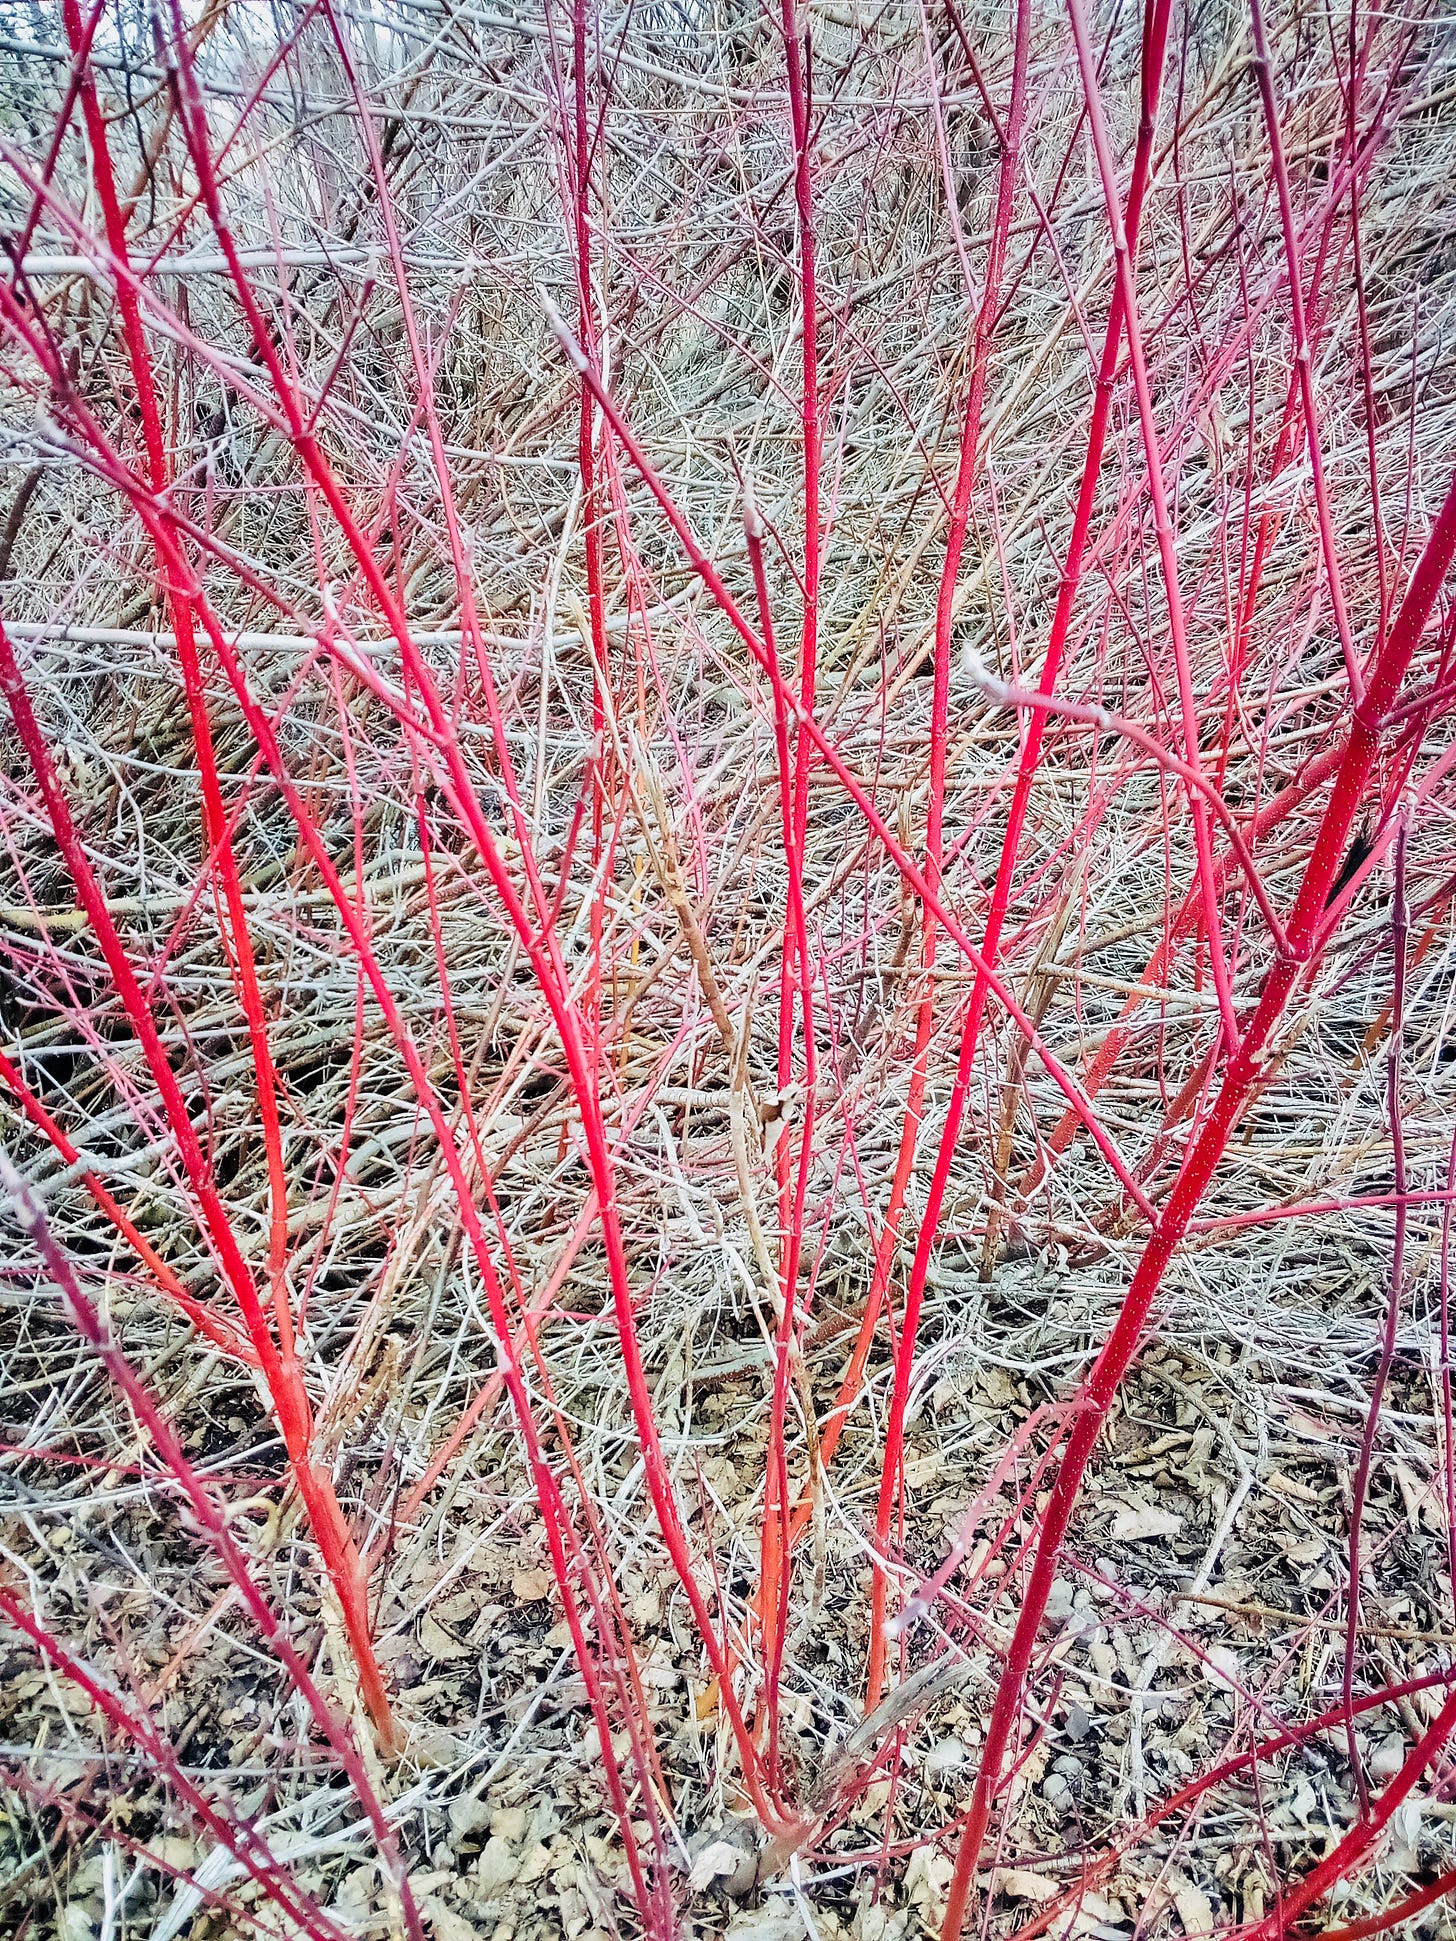 Red stems of a shrub